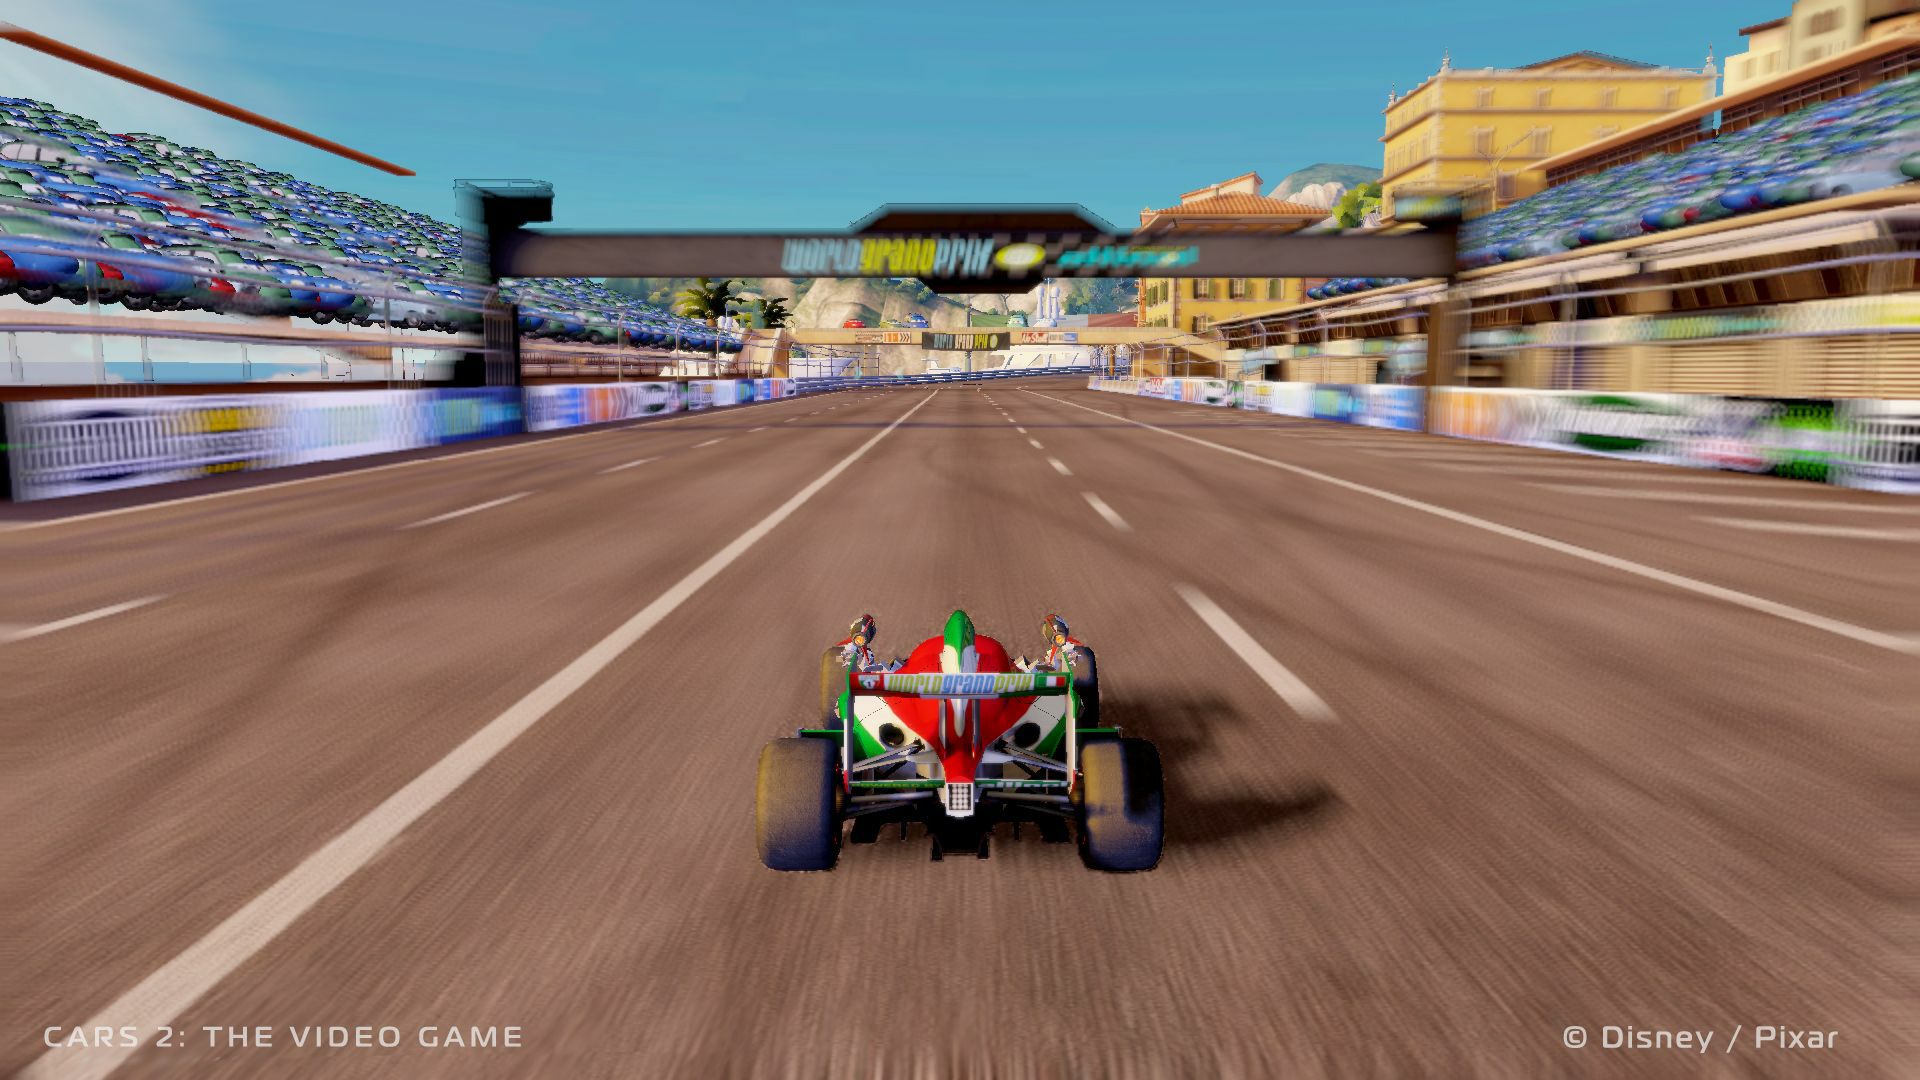 Todo Juegos > TodoJuegos Screen Shots > Wii > Cars 2